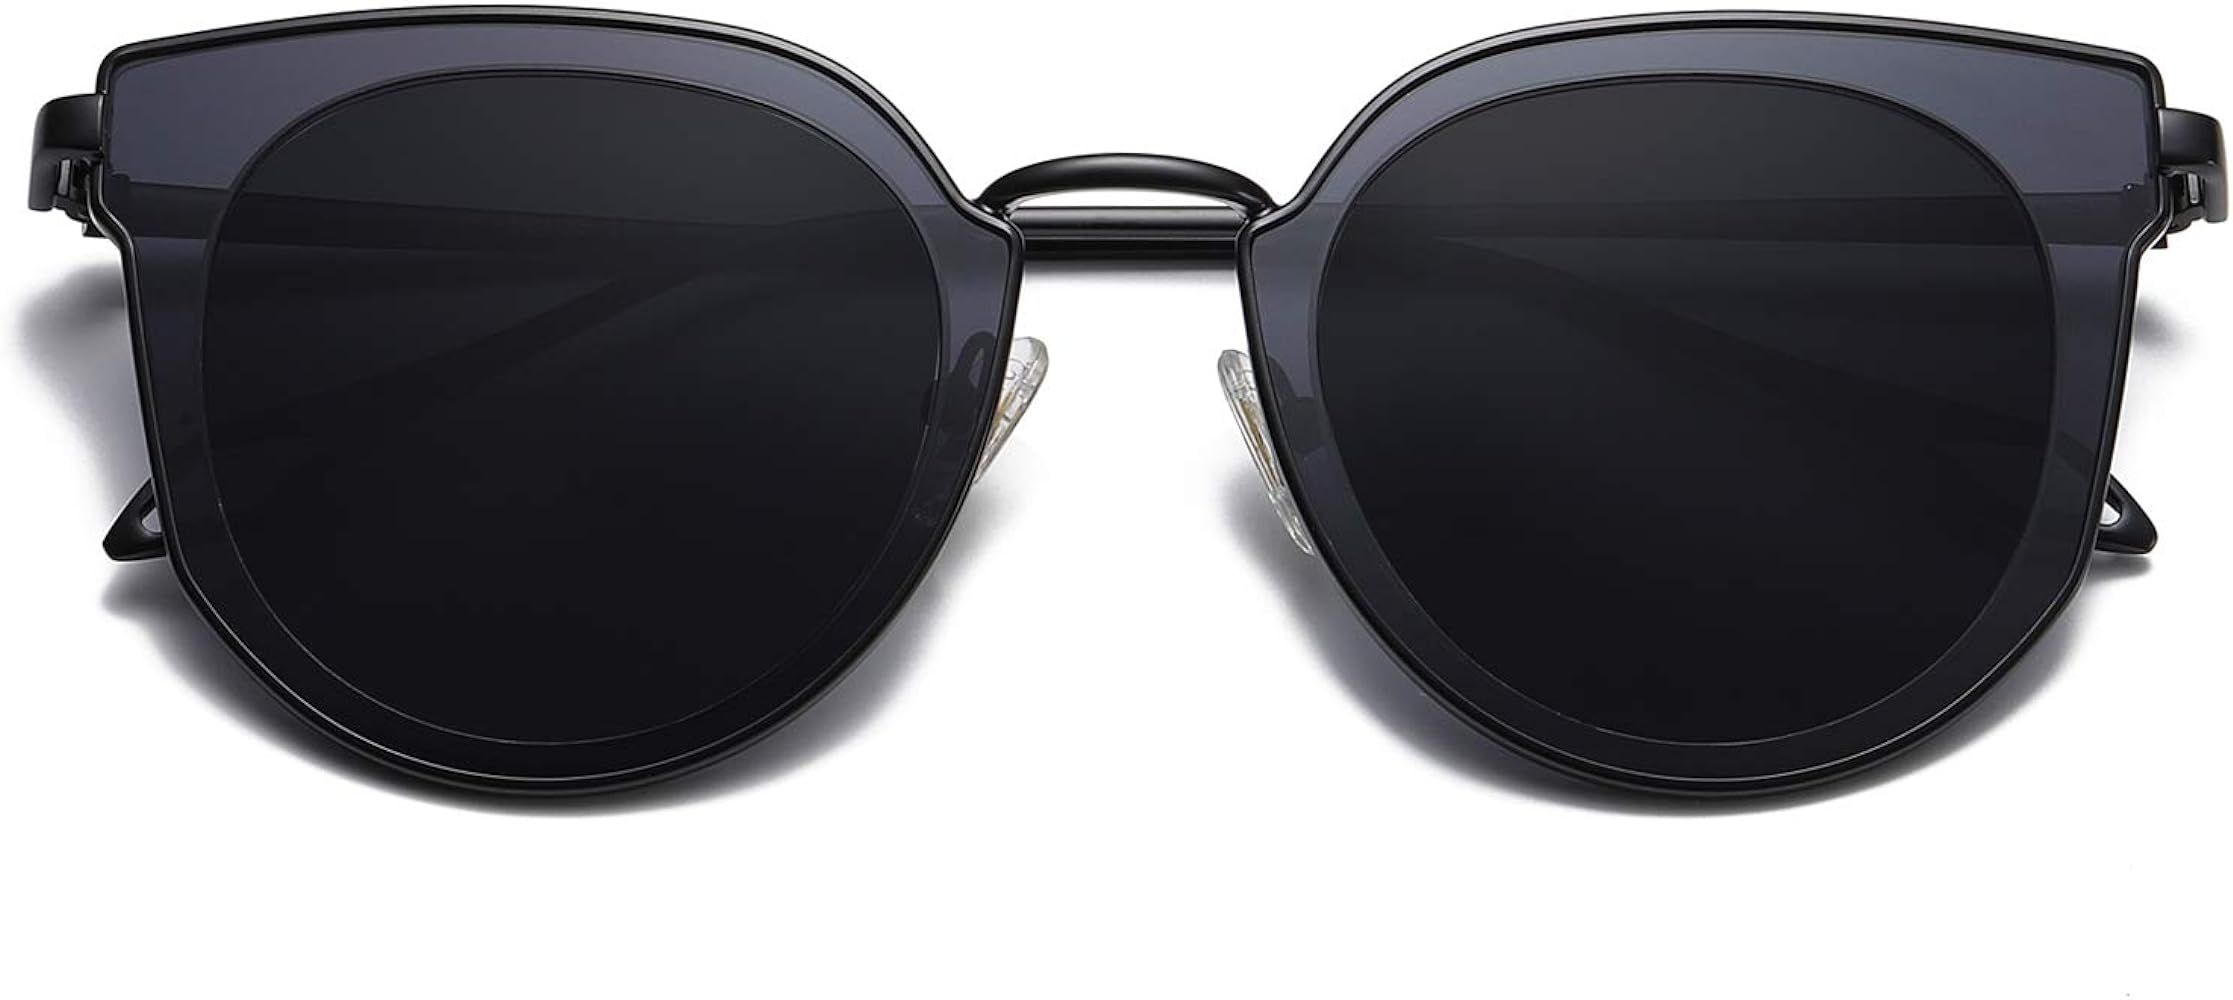 SOJOS Fashion Round Polarized Sunglasses for Women UV400 Mirrored Lens SJ1057 with Rose Gold Fram... | Amazon (US)